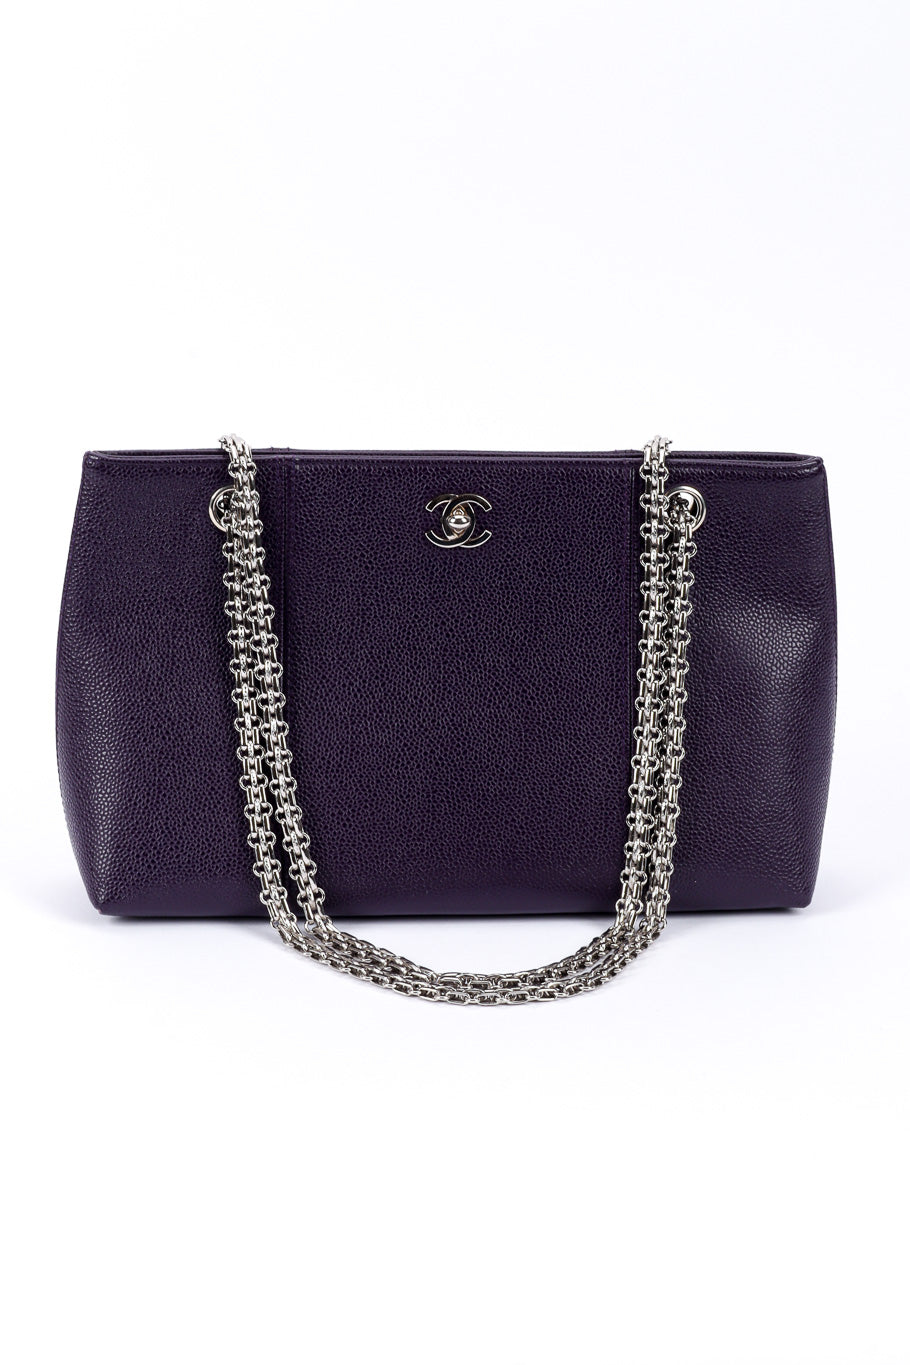 Chanel Bijoux Chain Shoulder Bag front @recessla